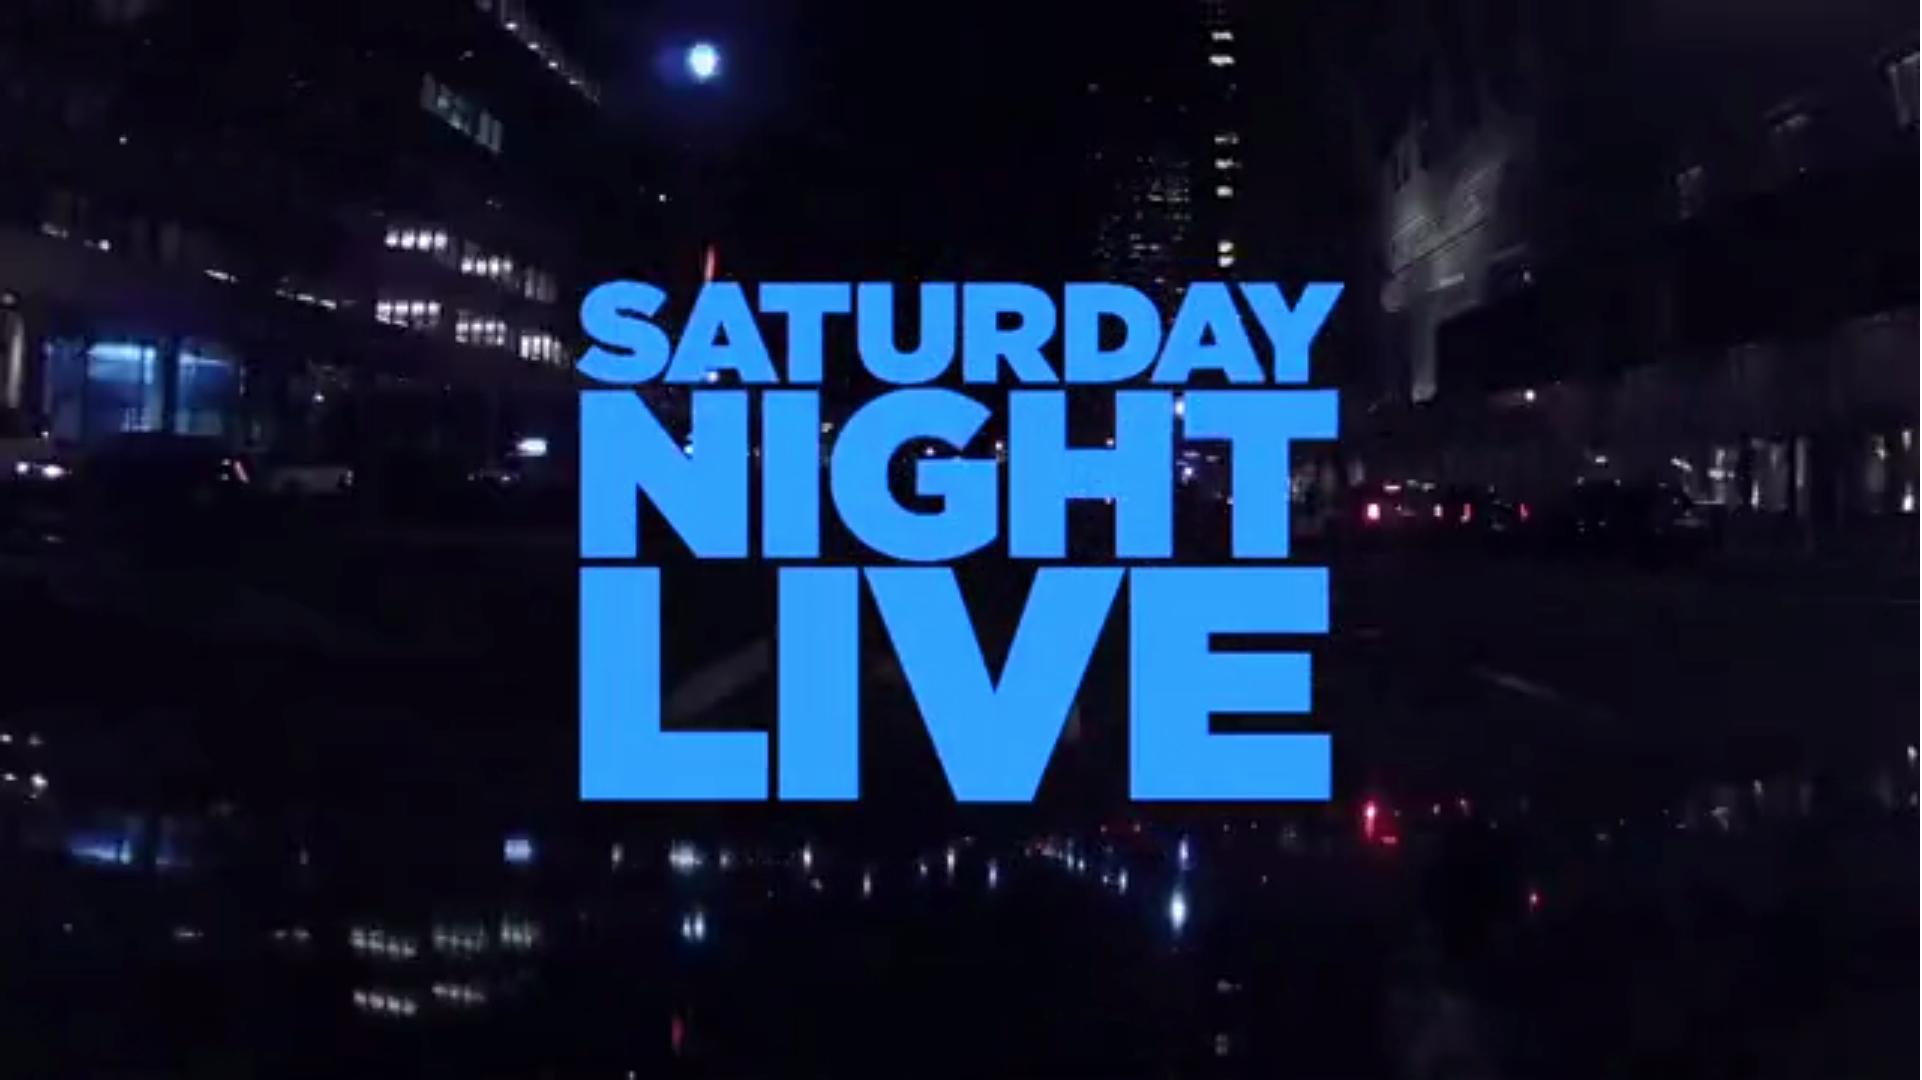 Saturday Night Live Wallpaper for PC. Full HD Picture